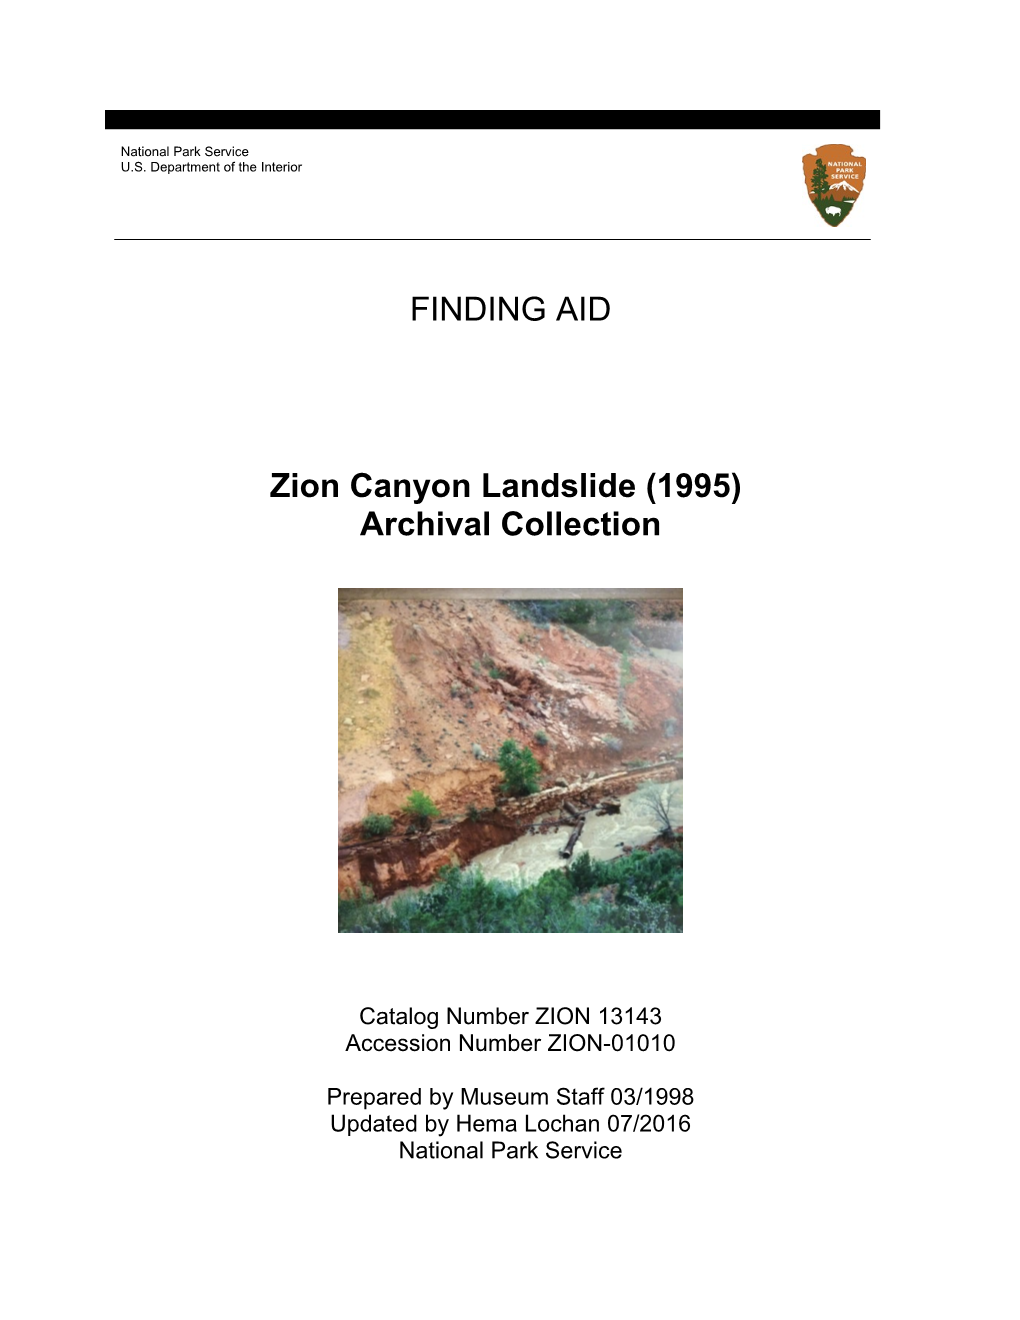 Zion Canyon Landslide (1995)